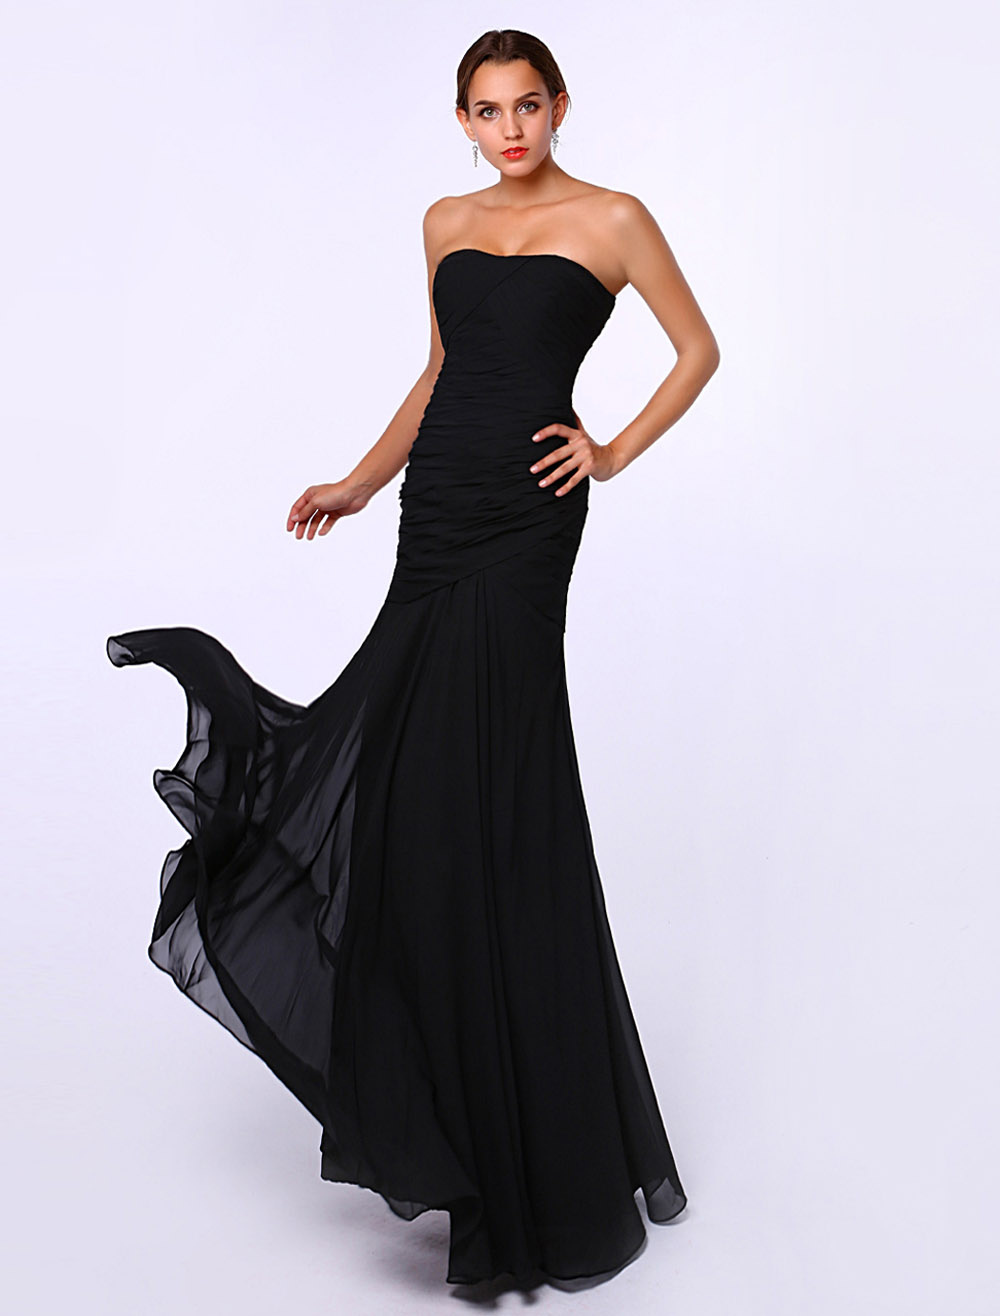 Black Mermaid Strapless Chiffon Dress For Mother of the Bride - Milanoo.com